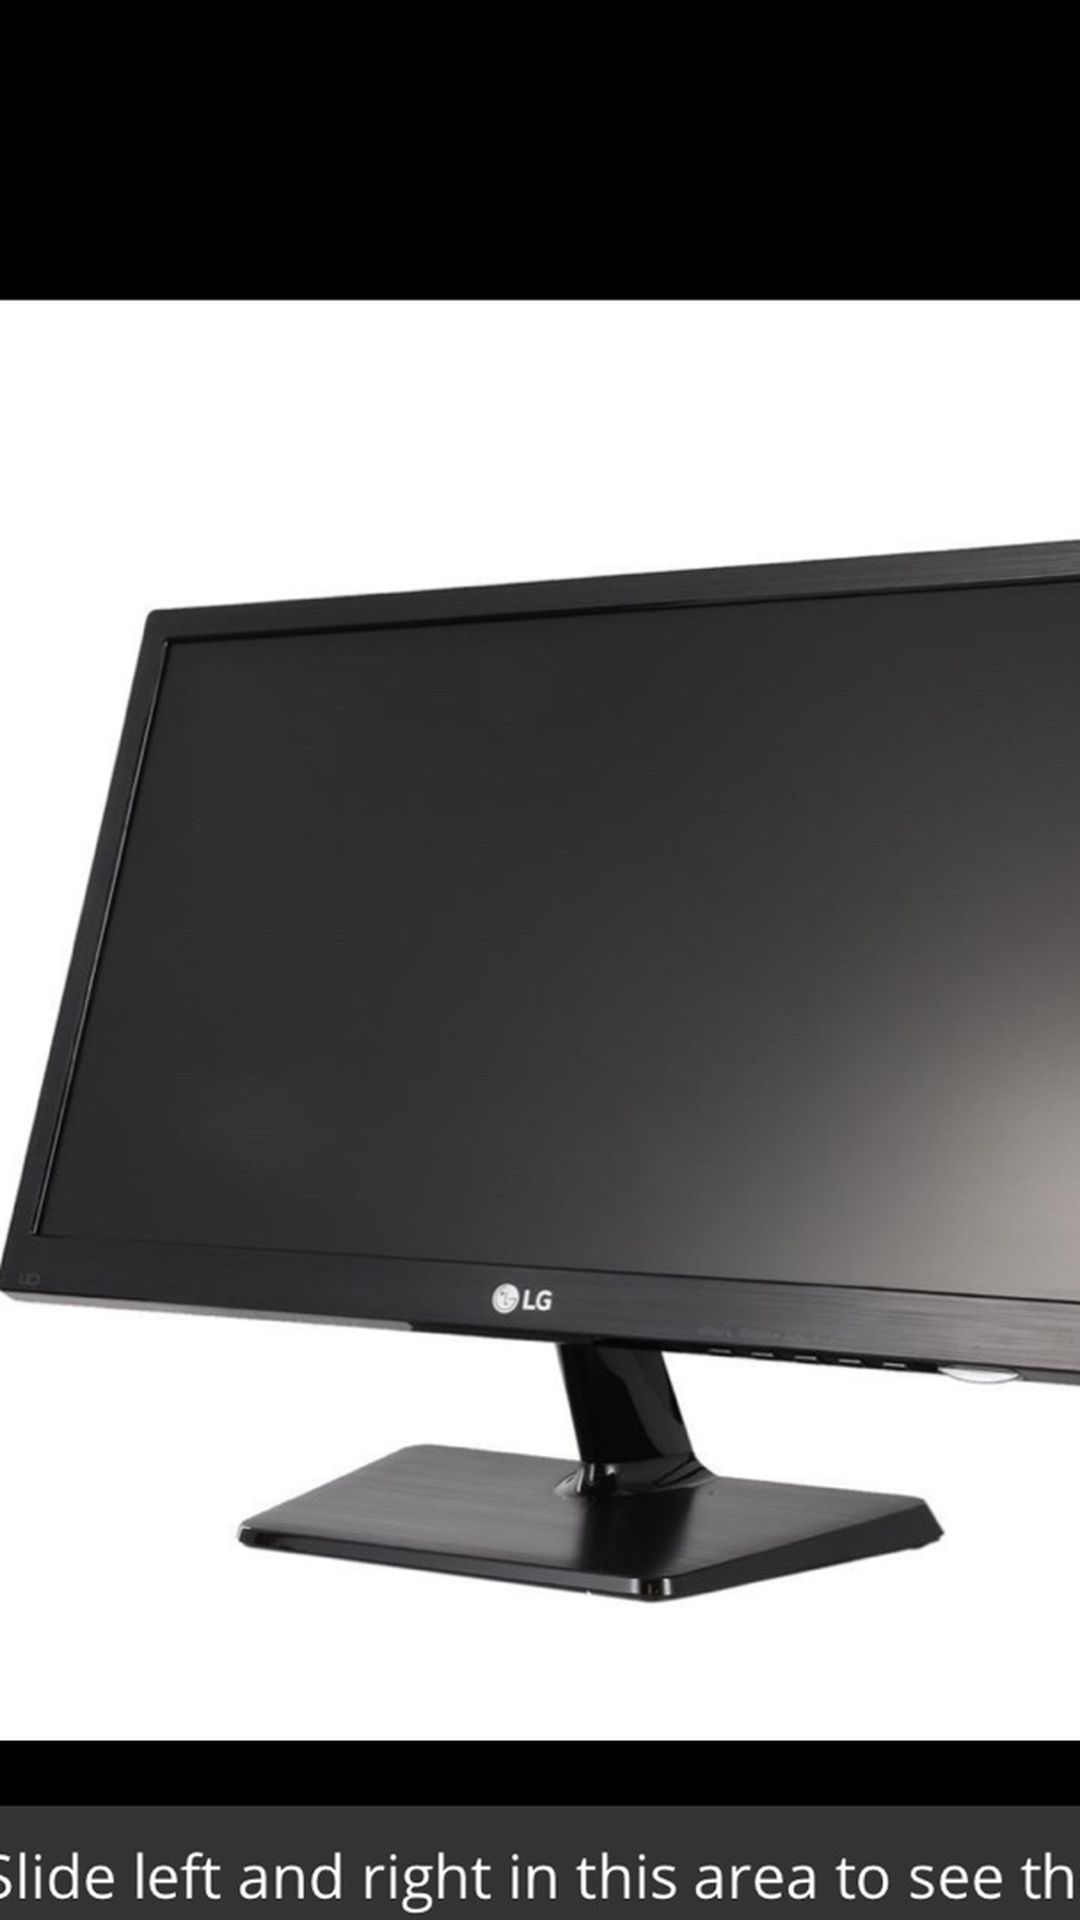 LG 22” Monitor Perfect Condition